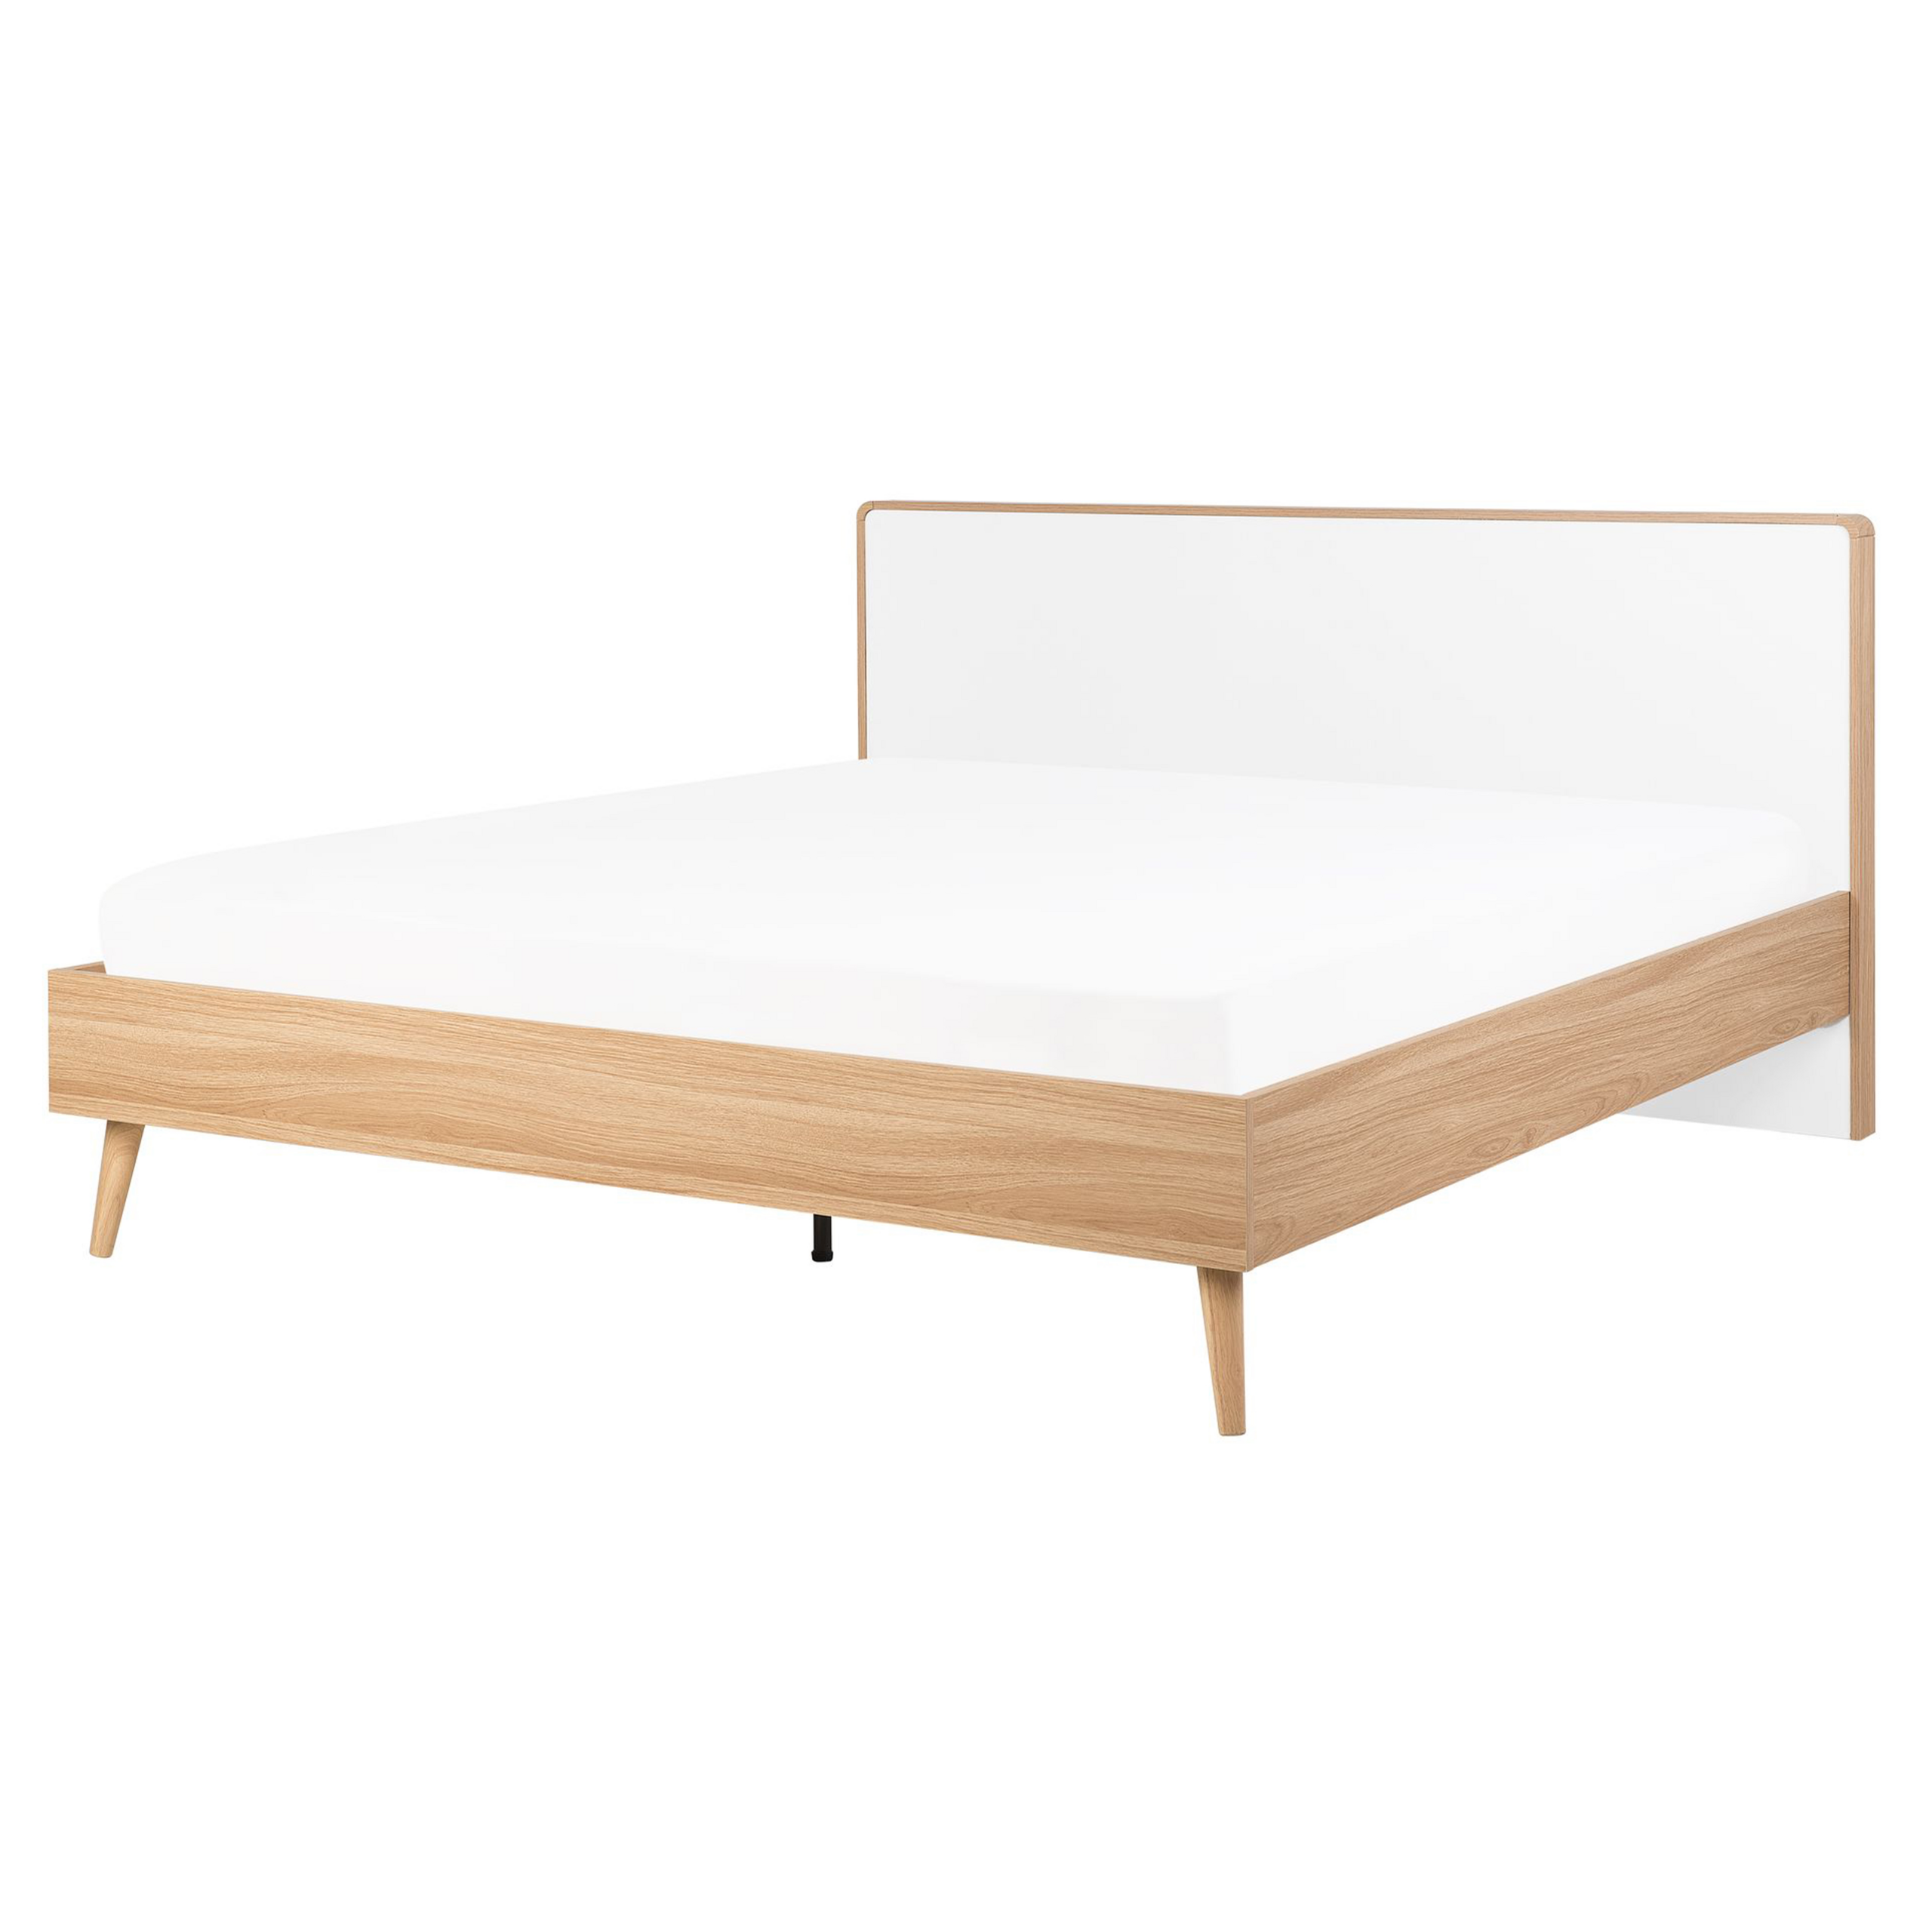 Beliani Slatted Bed Frame Light Manufactured Wood and White Headboard 5ft3 EU King Size Scandinavian Design